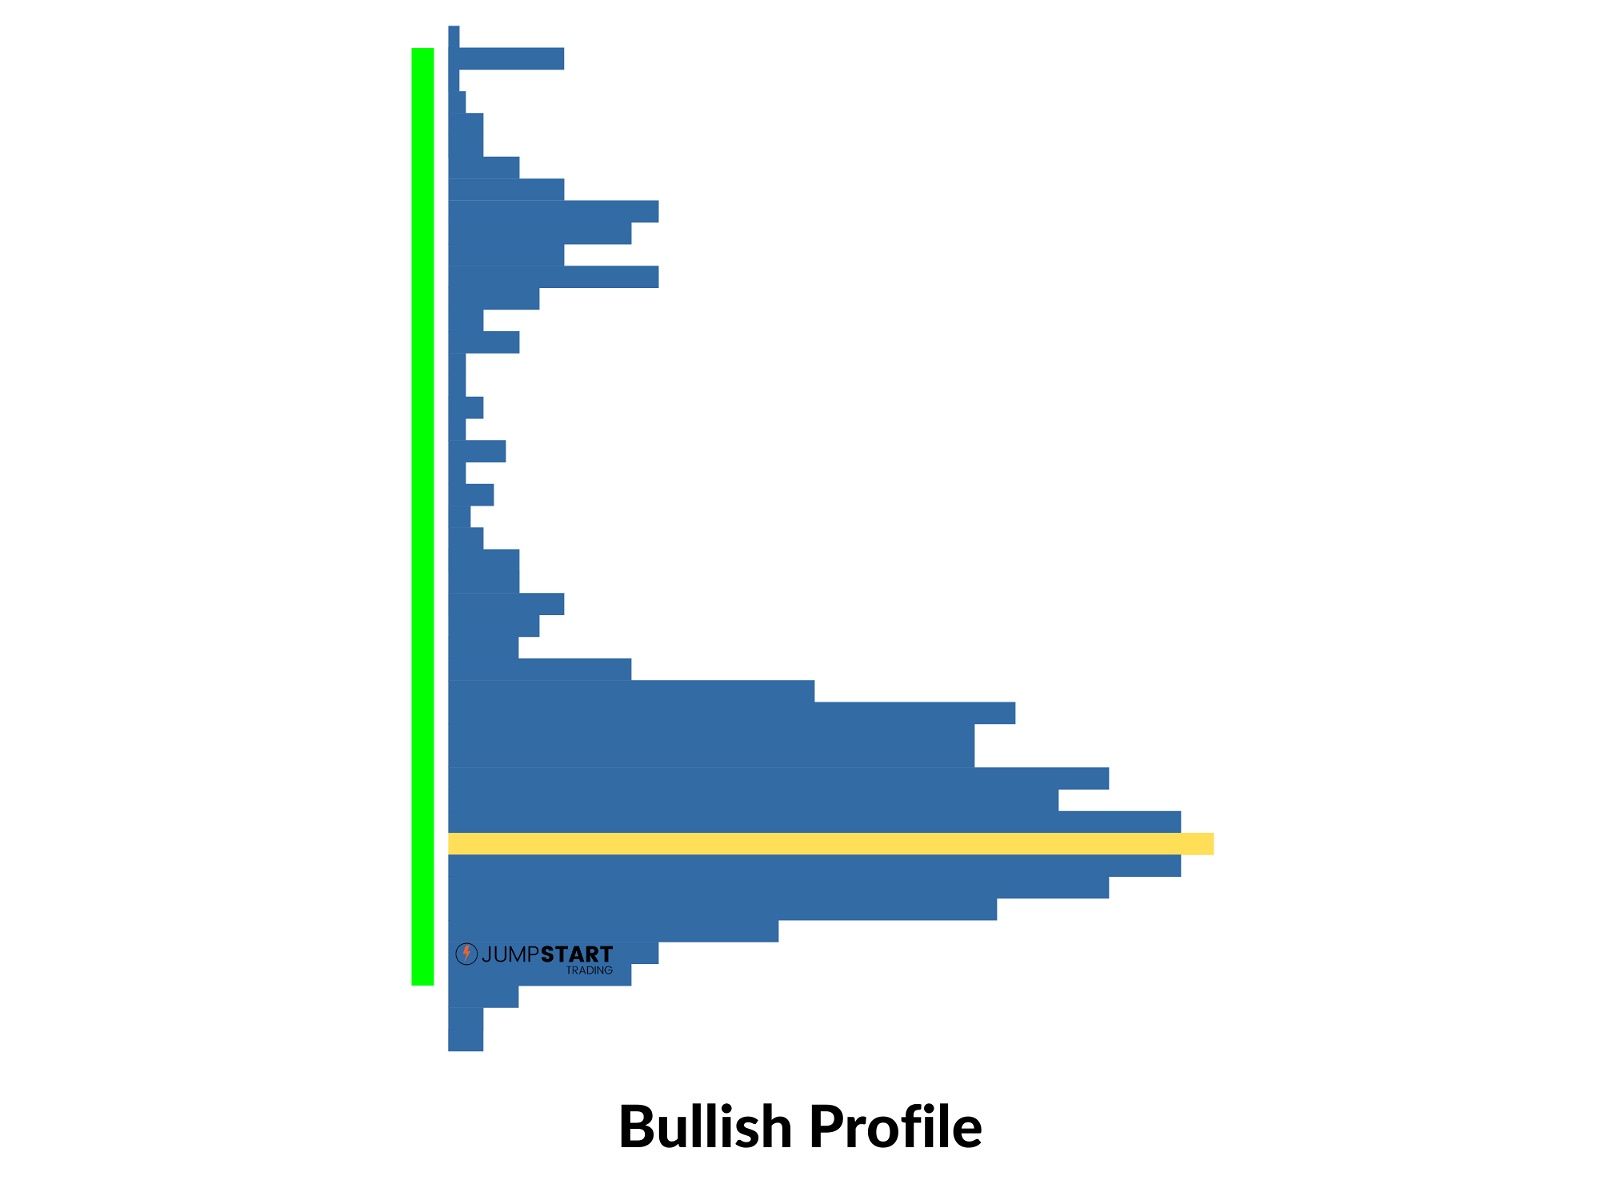 Bullish Volume Profile